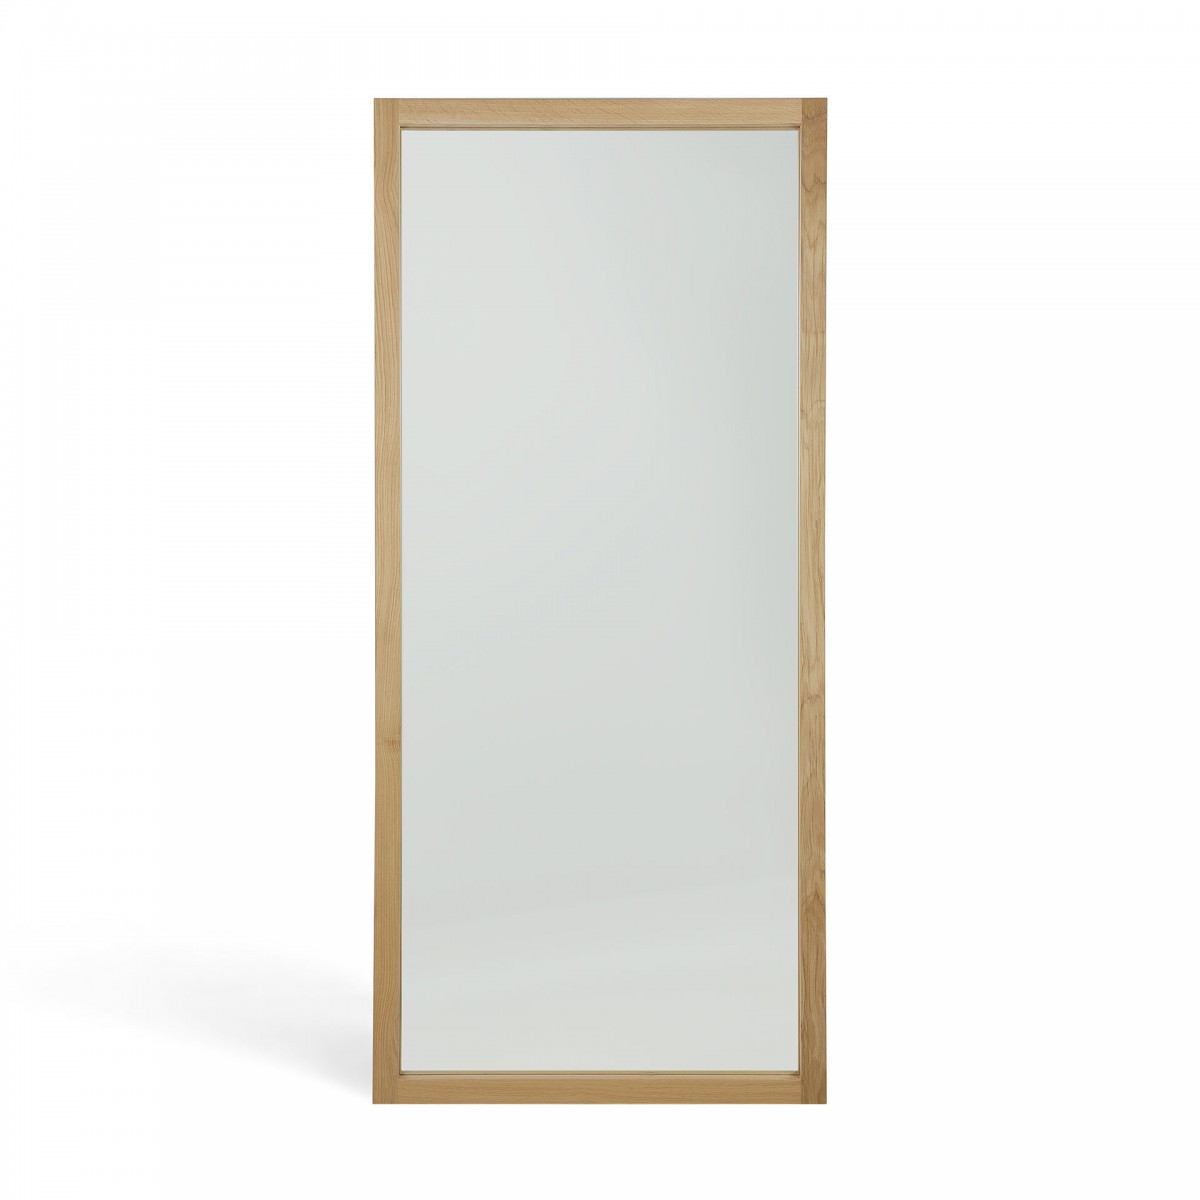 Light Frame Mirror | Highlight image